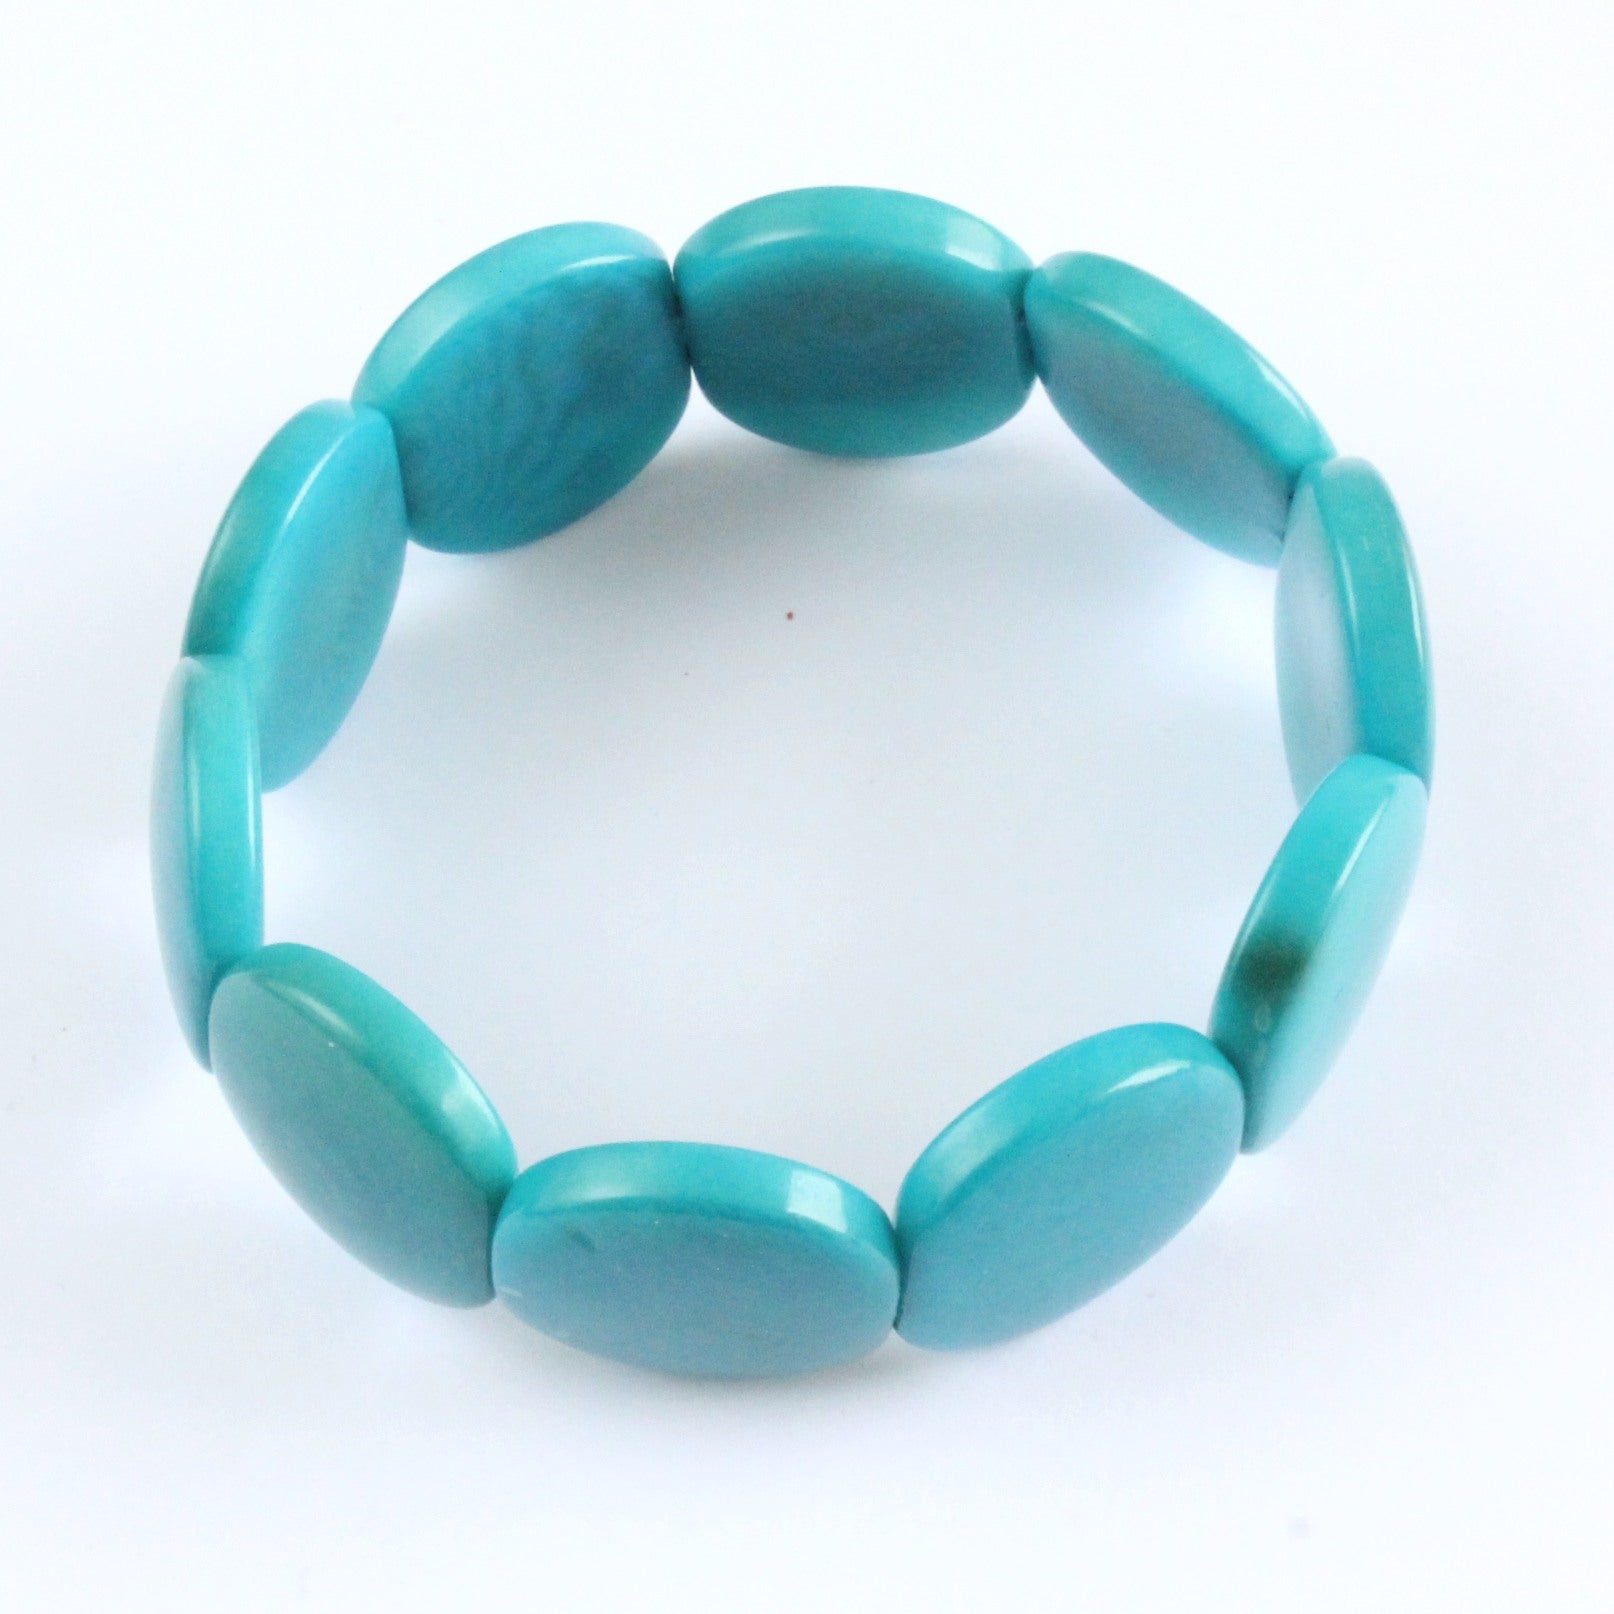 Handmade bracelet, tagua nut, sustainable,  colourful, turquoise